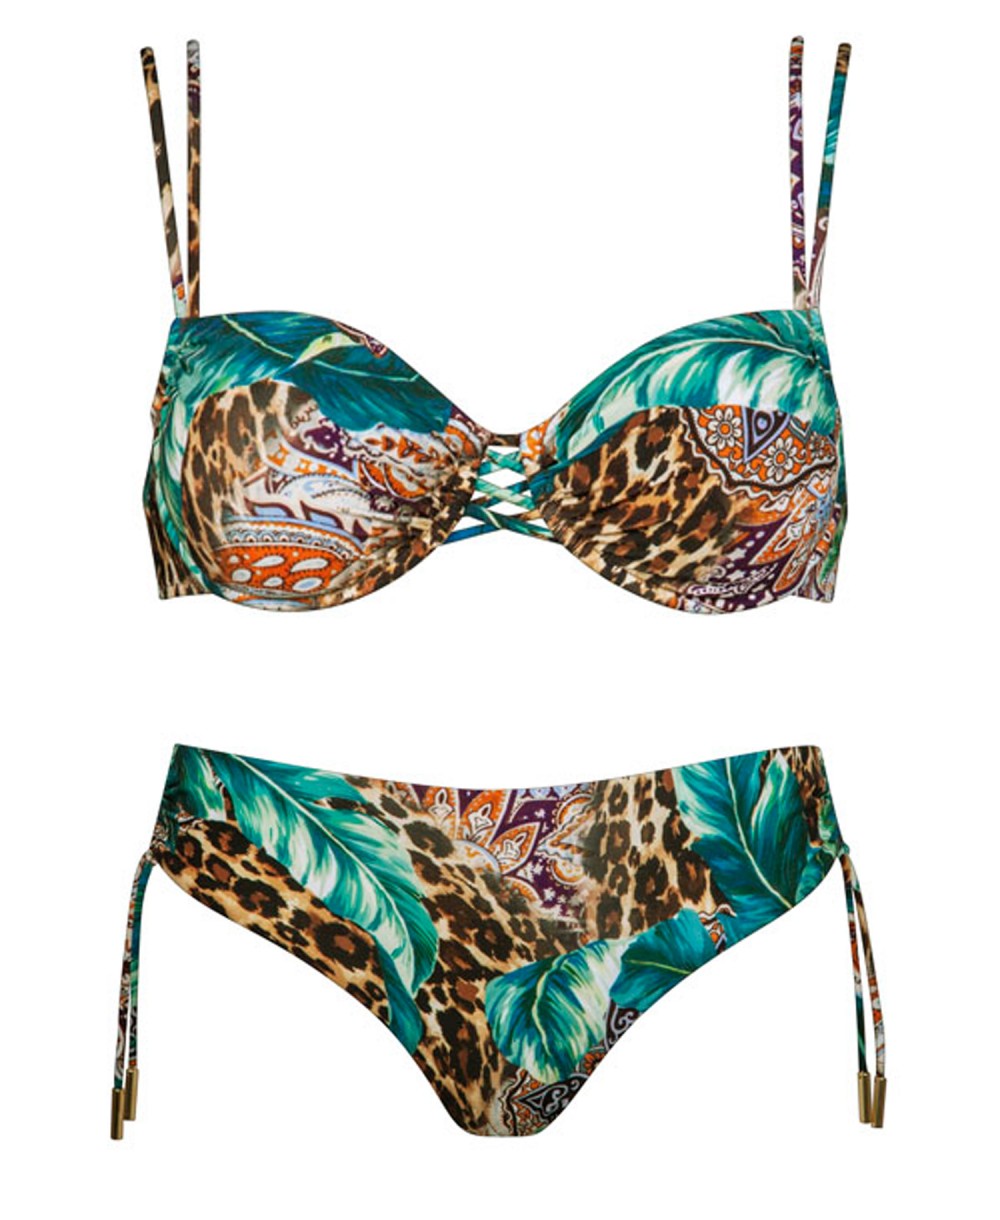 Featured image for “Bikini Exotica Maryan Mehlhorn”